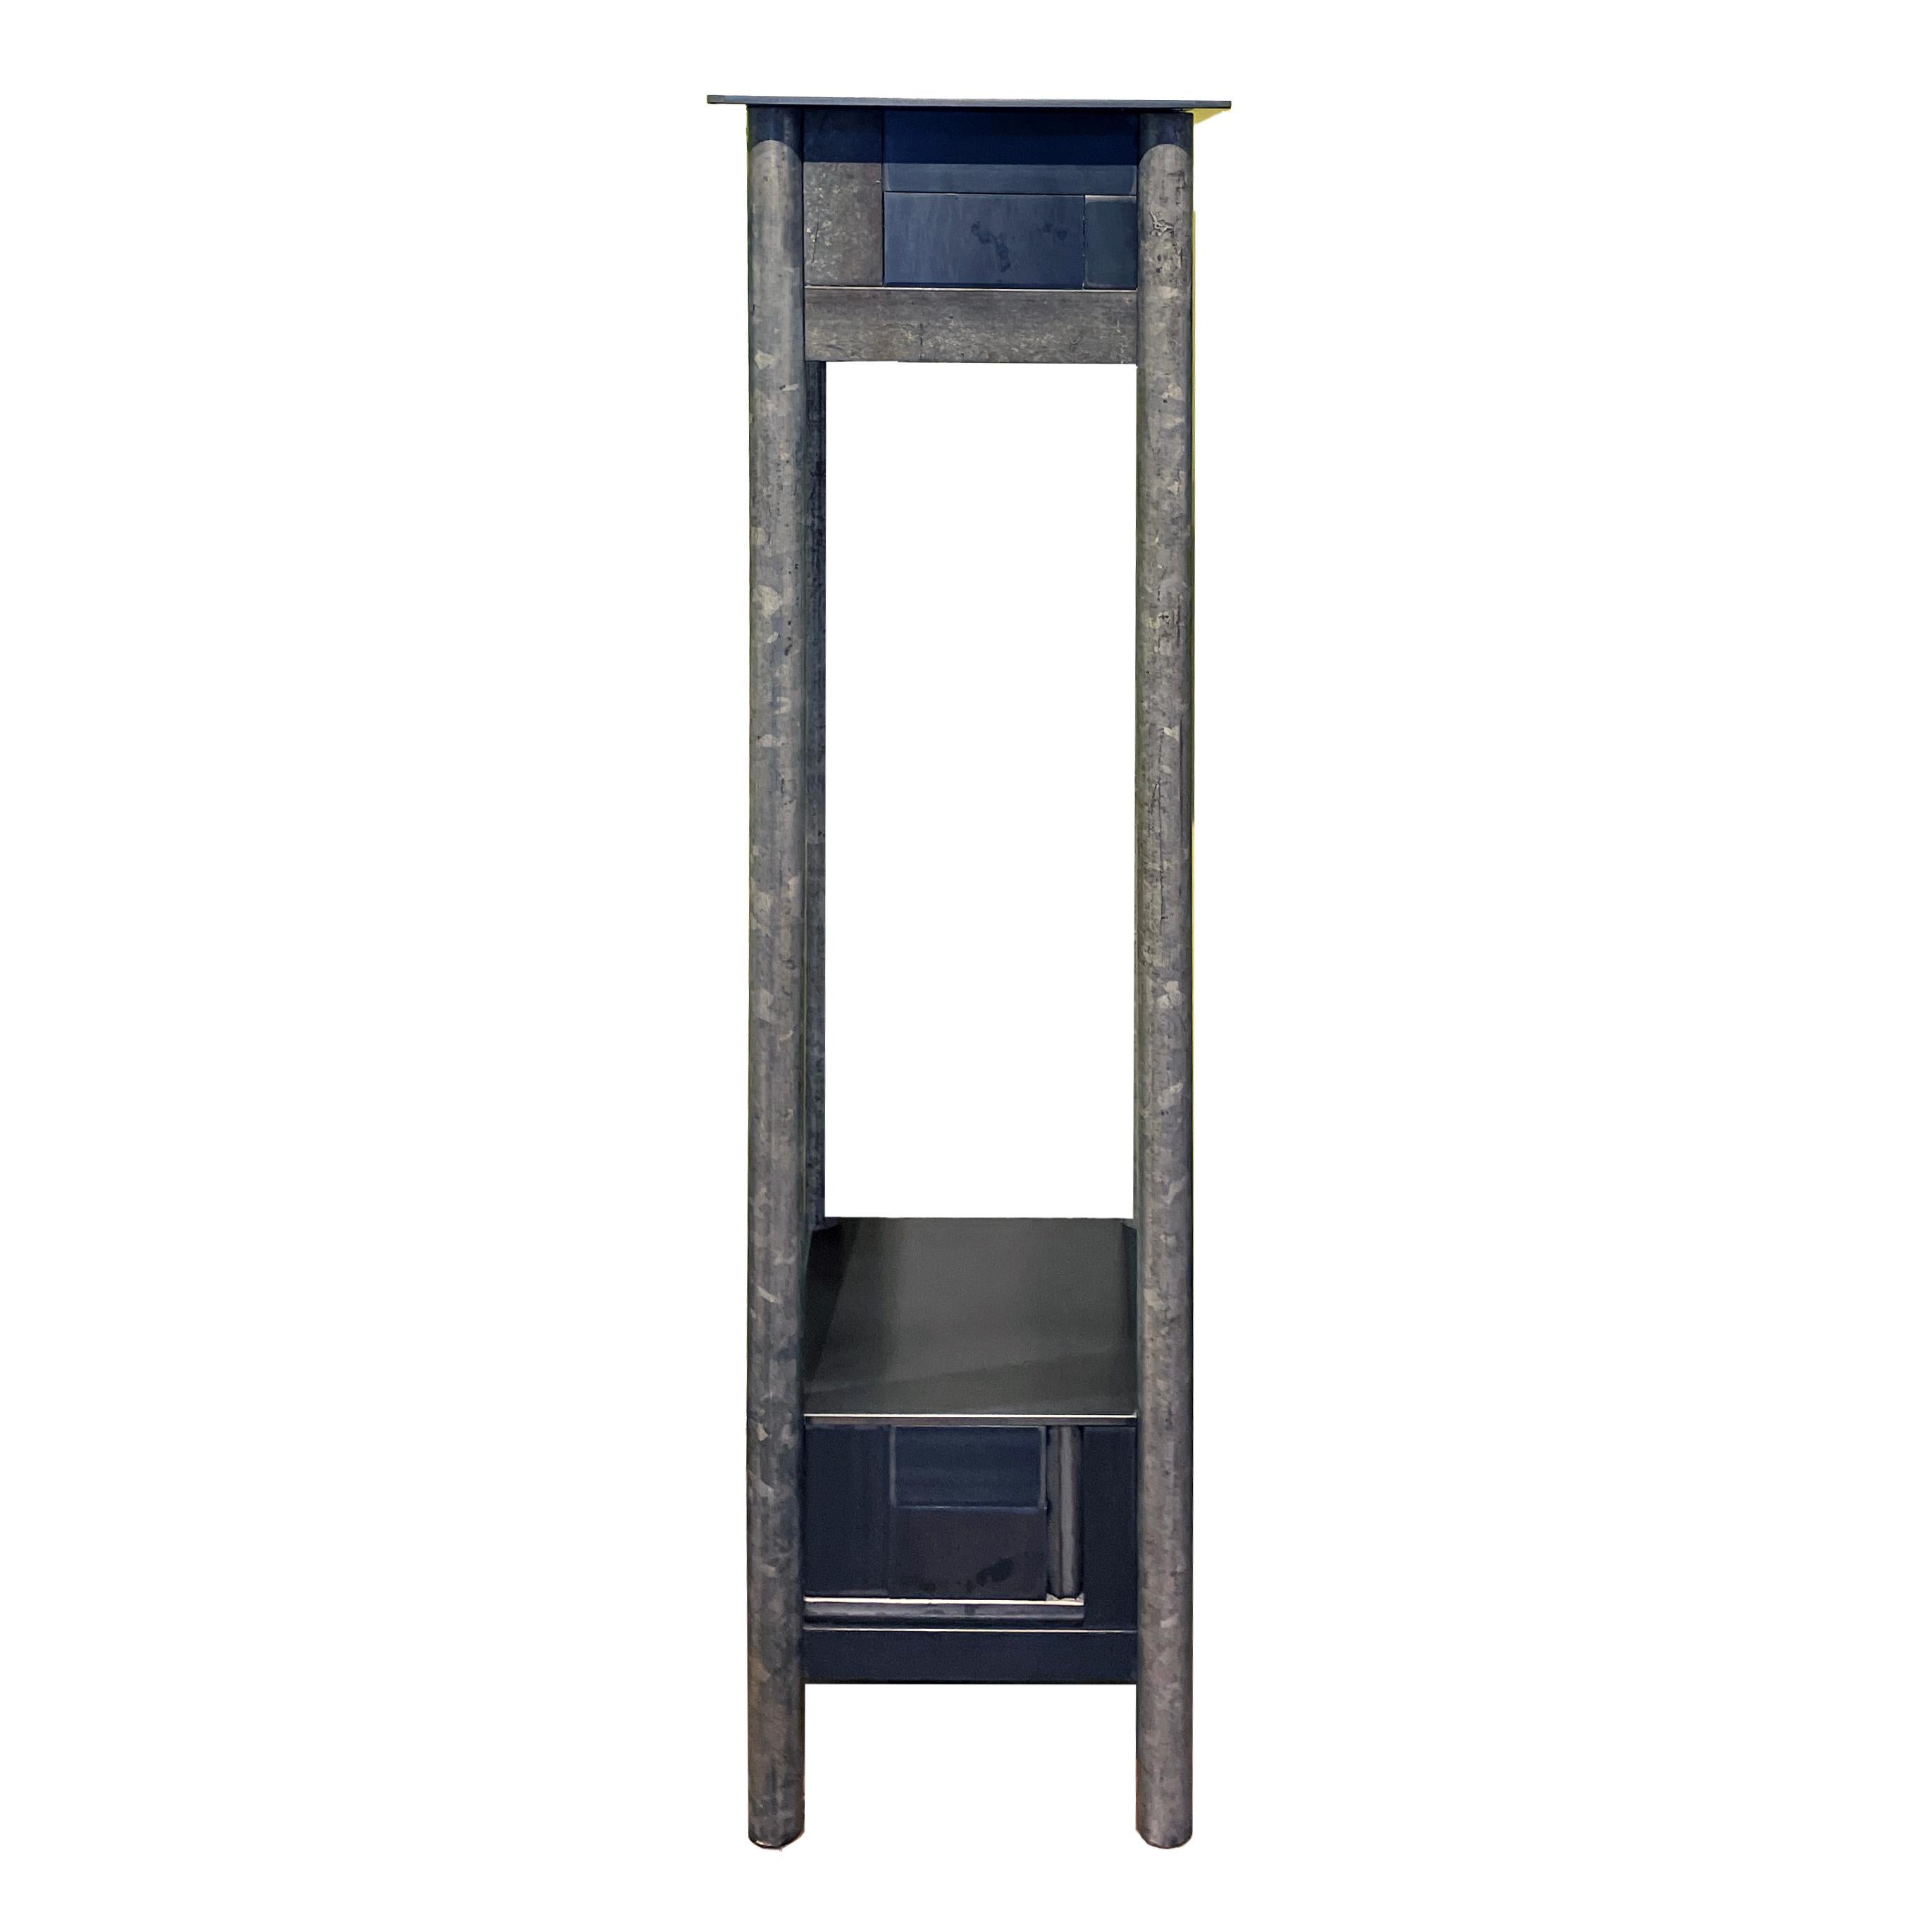 Jim Rose Steel Pedestal, Welded Steel with Shelf, Quilt Pattern Skirt 2